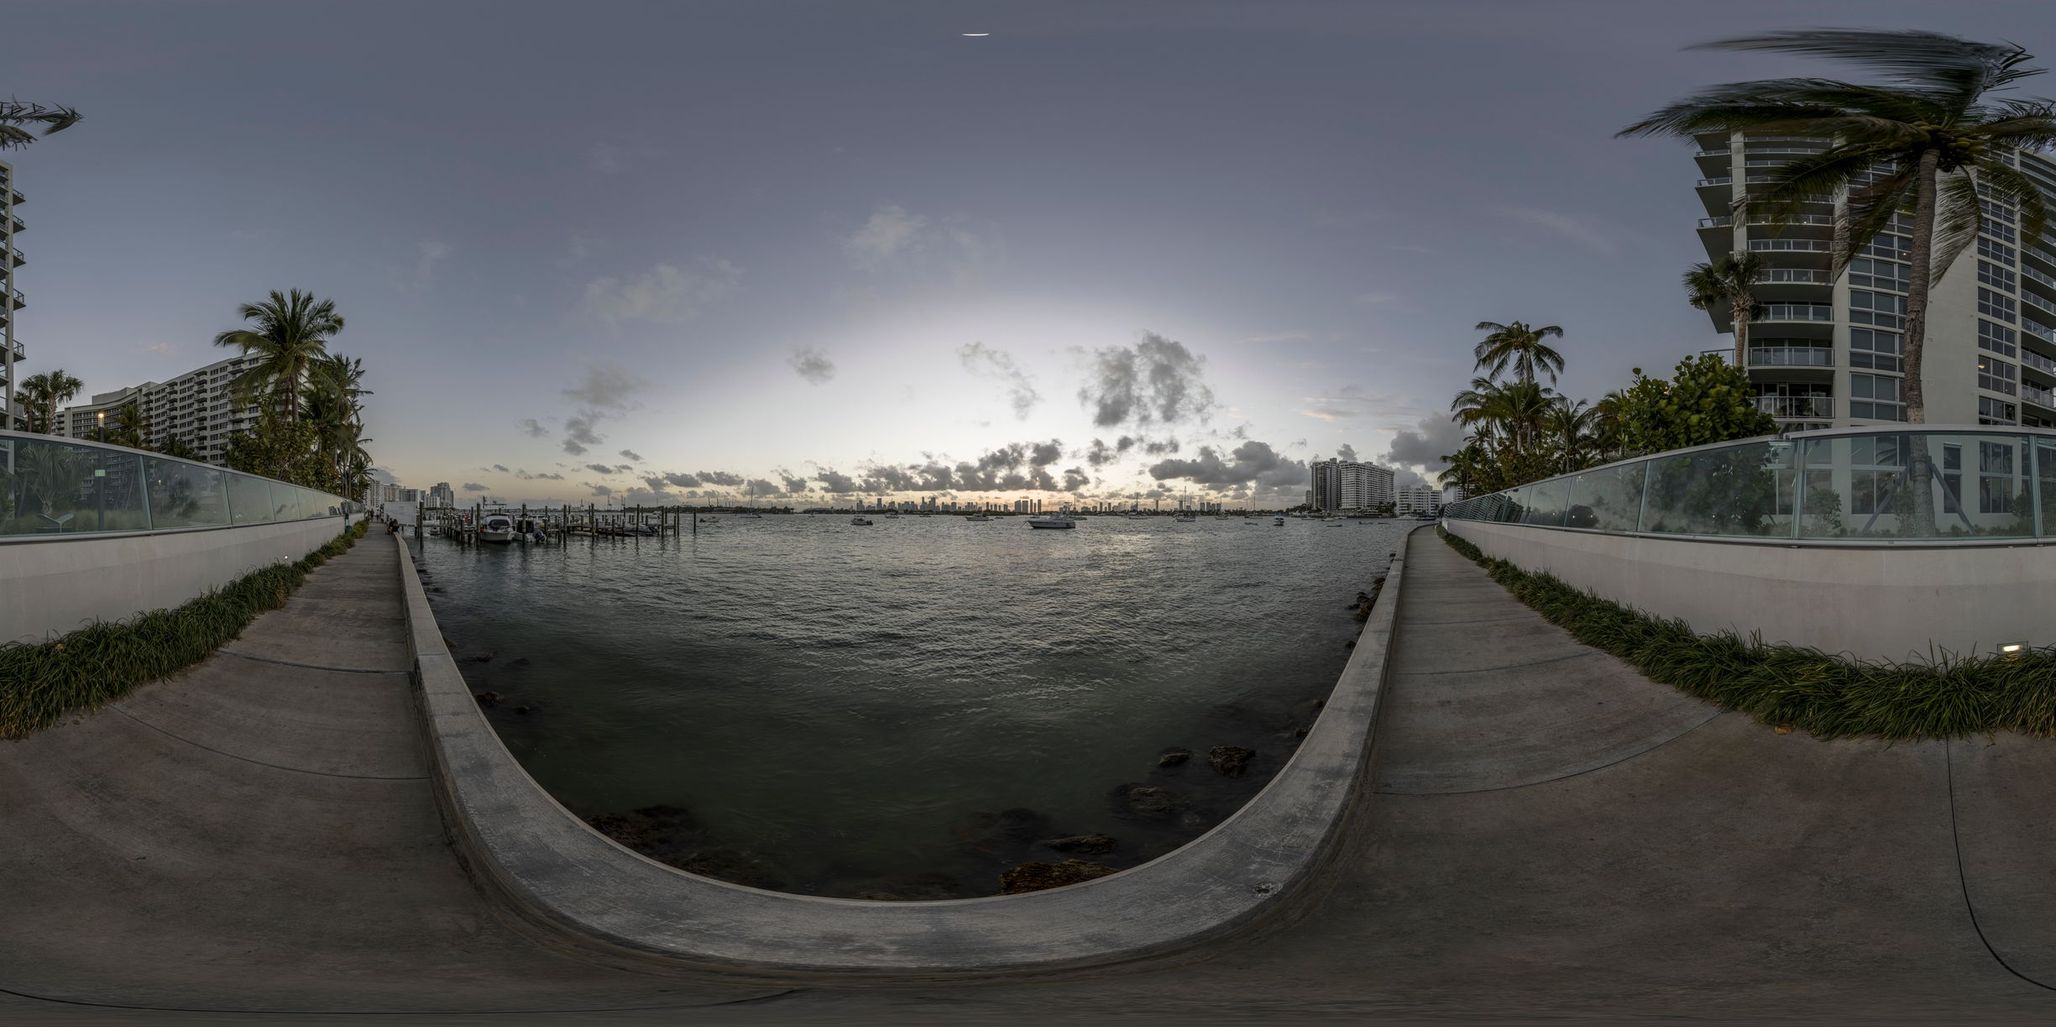 Miami Beach Sunset: Skyline and Harbor - HDRi Maps and Backplates